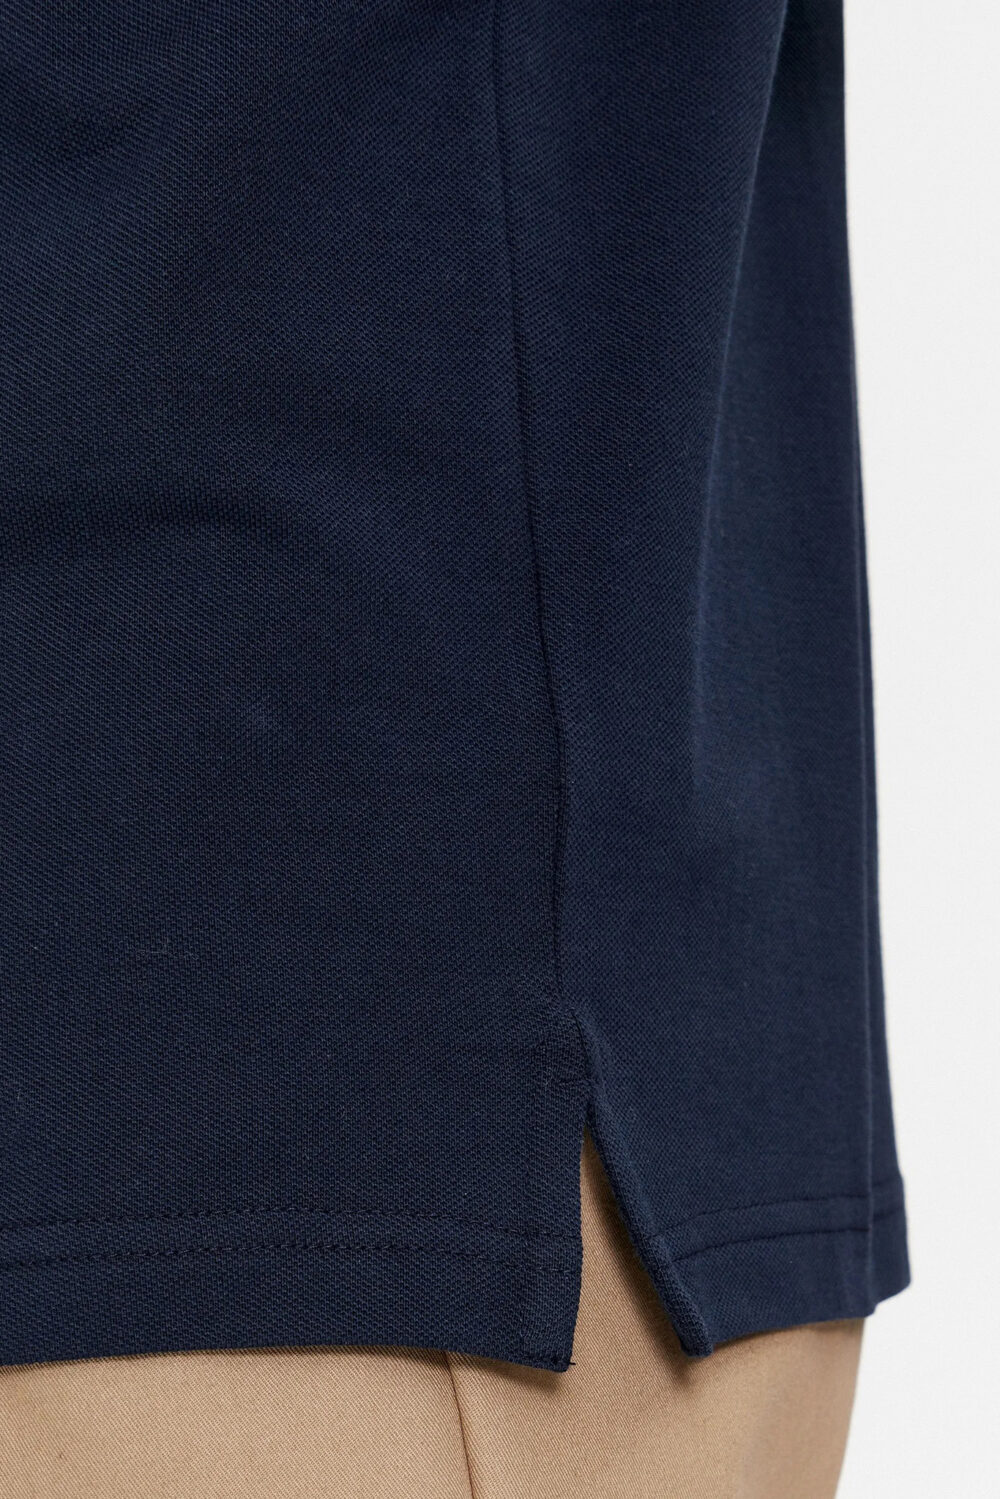 Polo manica corta Tommy Hilfiger Jeans SLIM PLACKET Blue scuro - Foto 4